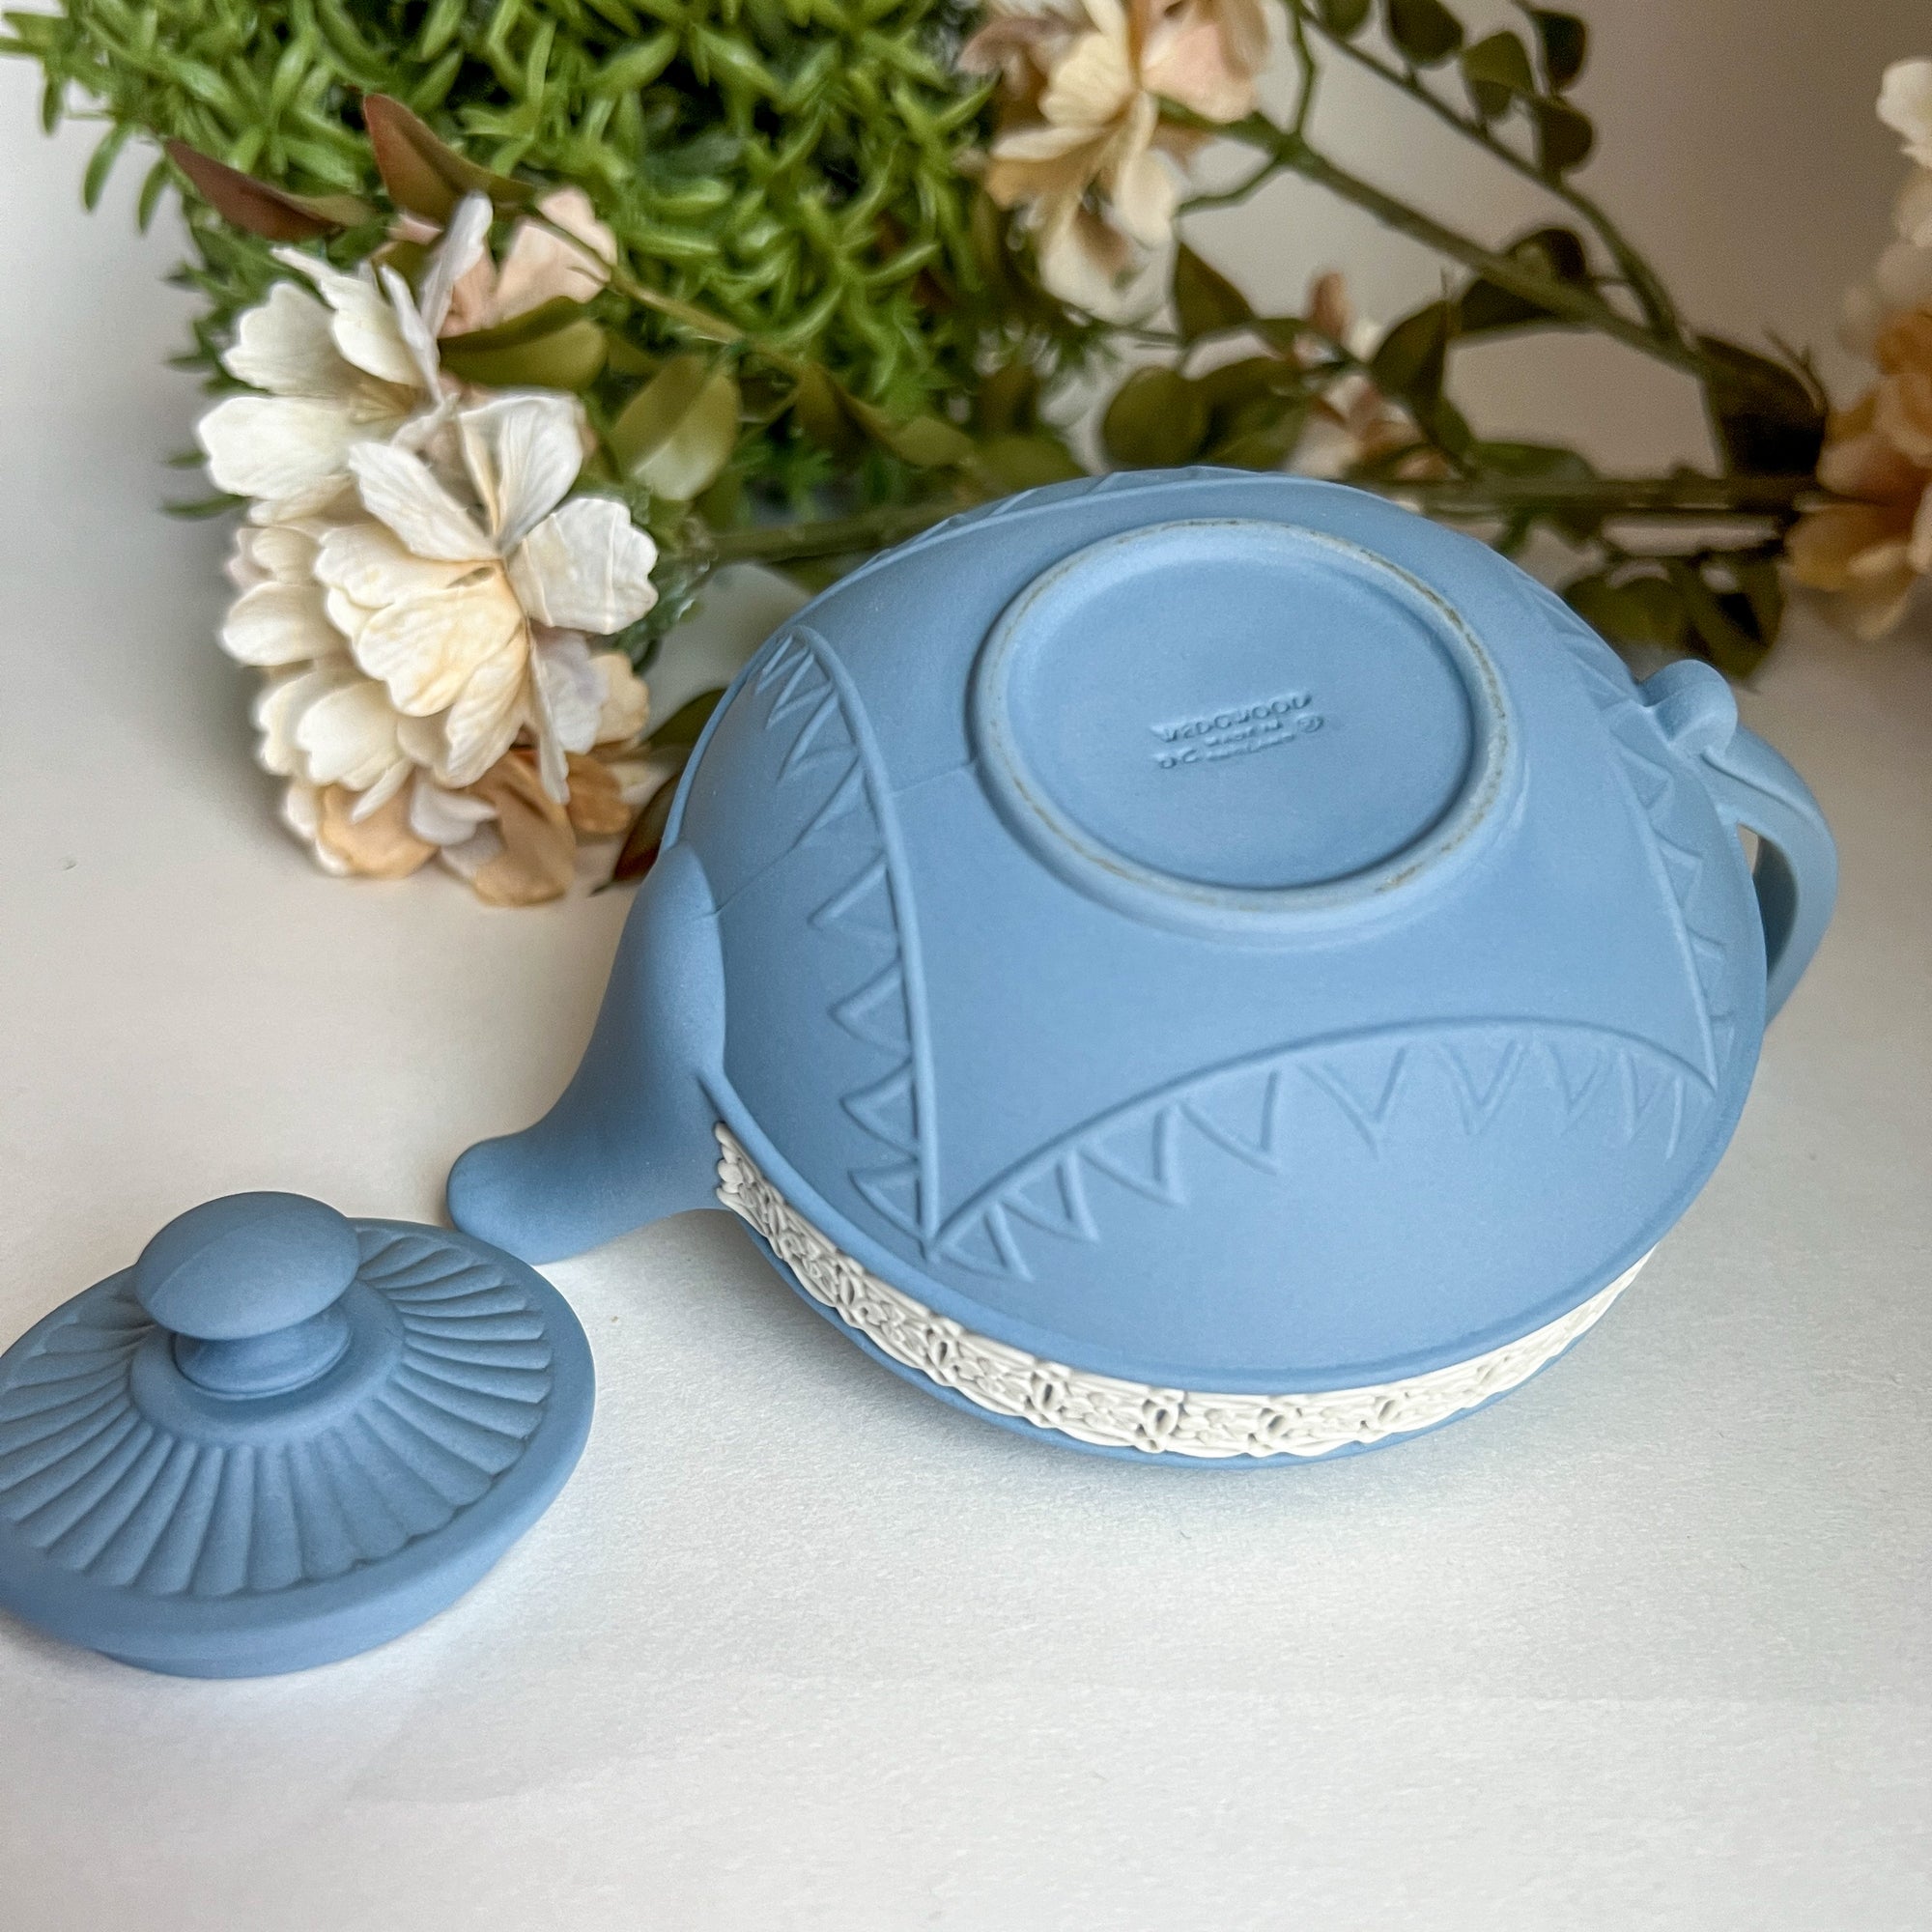 Mini Wedgwood Jasperware Teapot from 'Egyptian Collection'